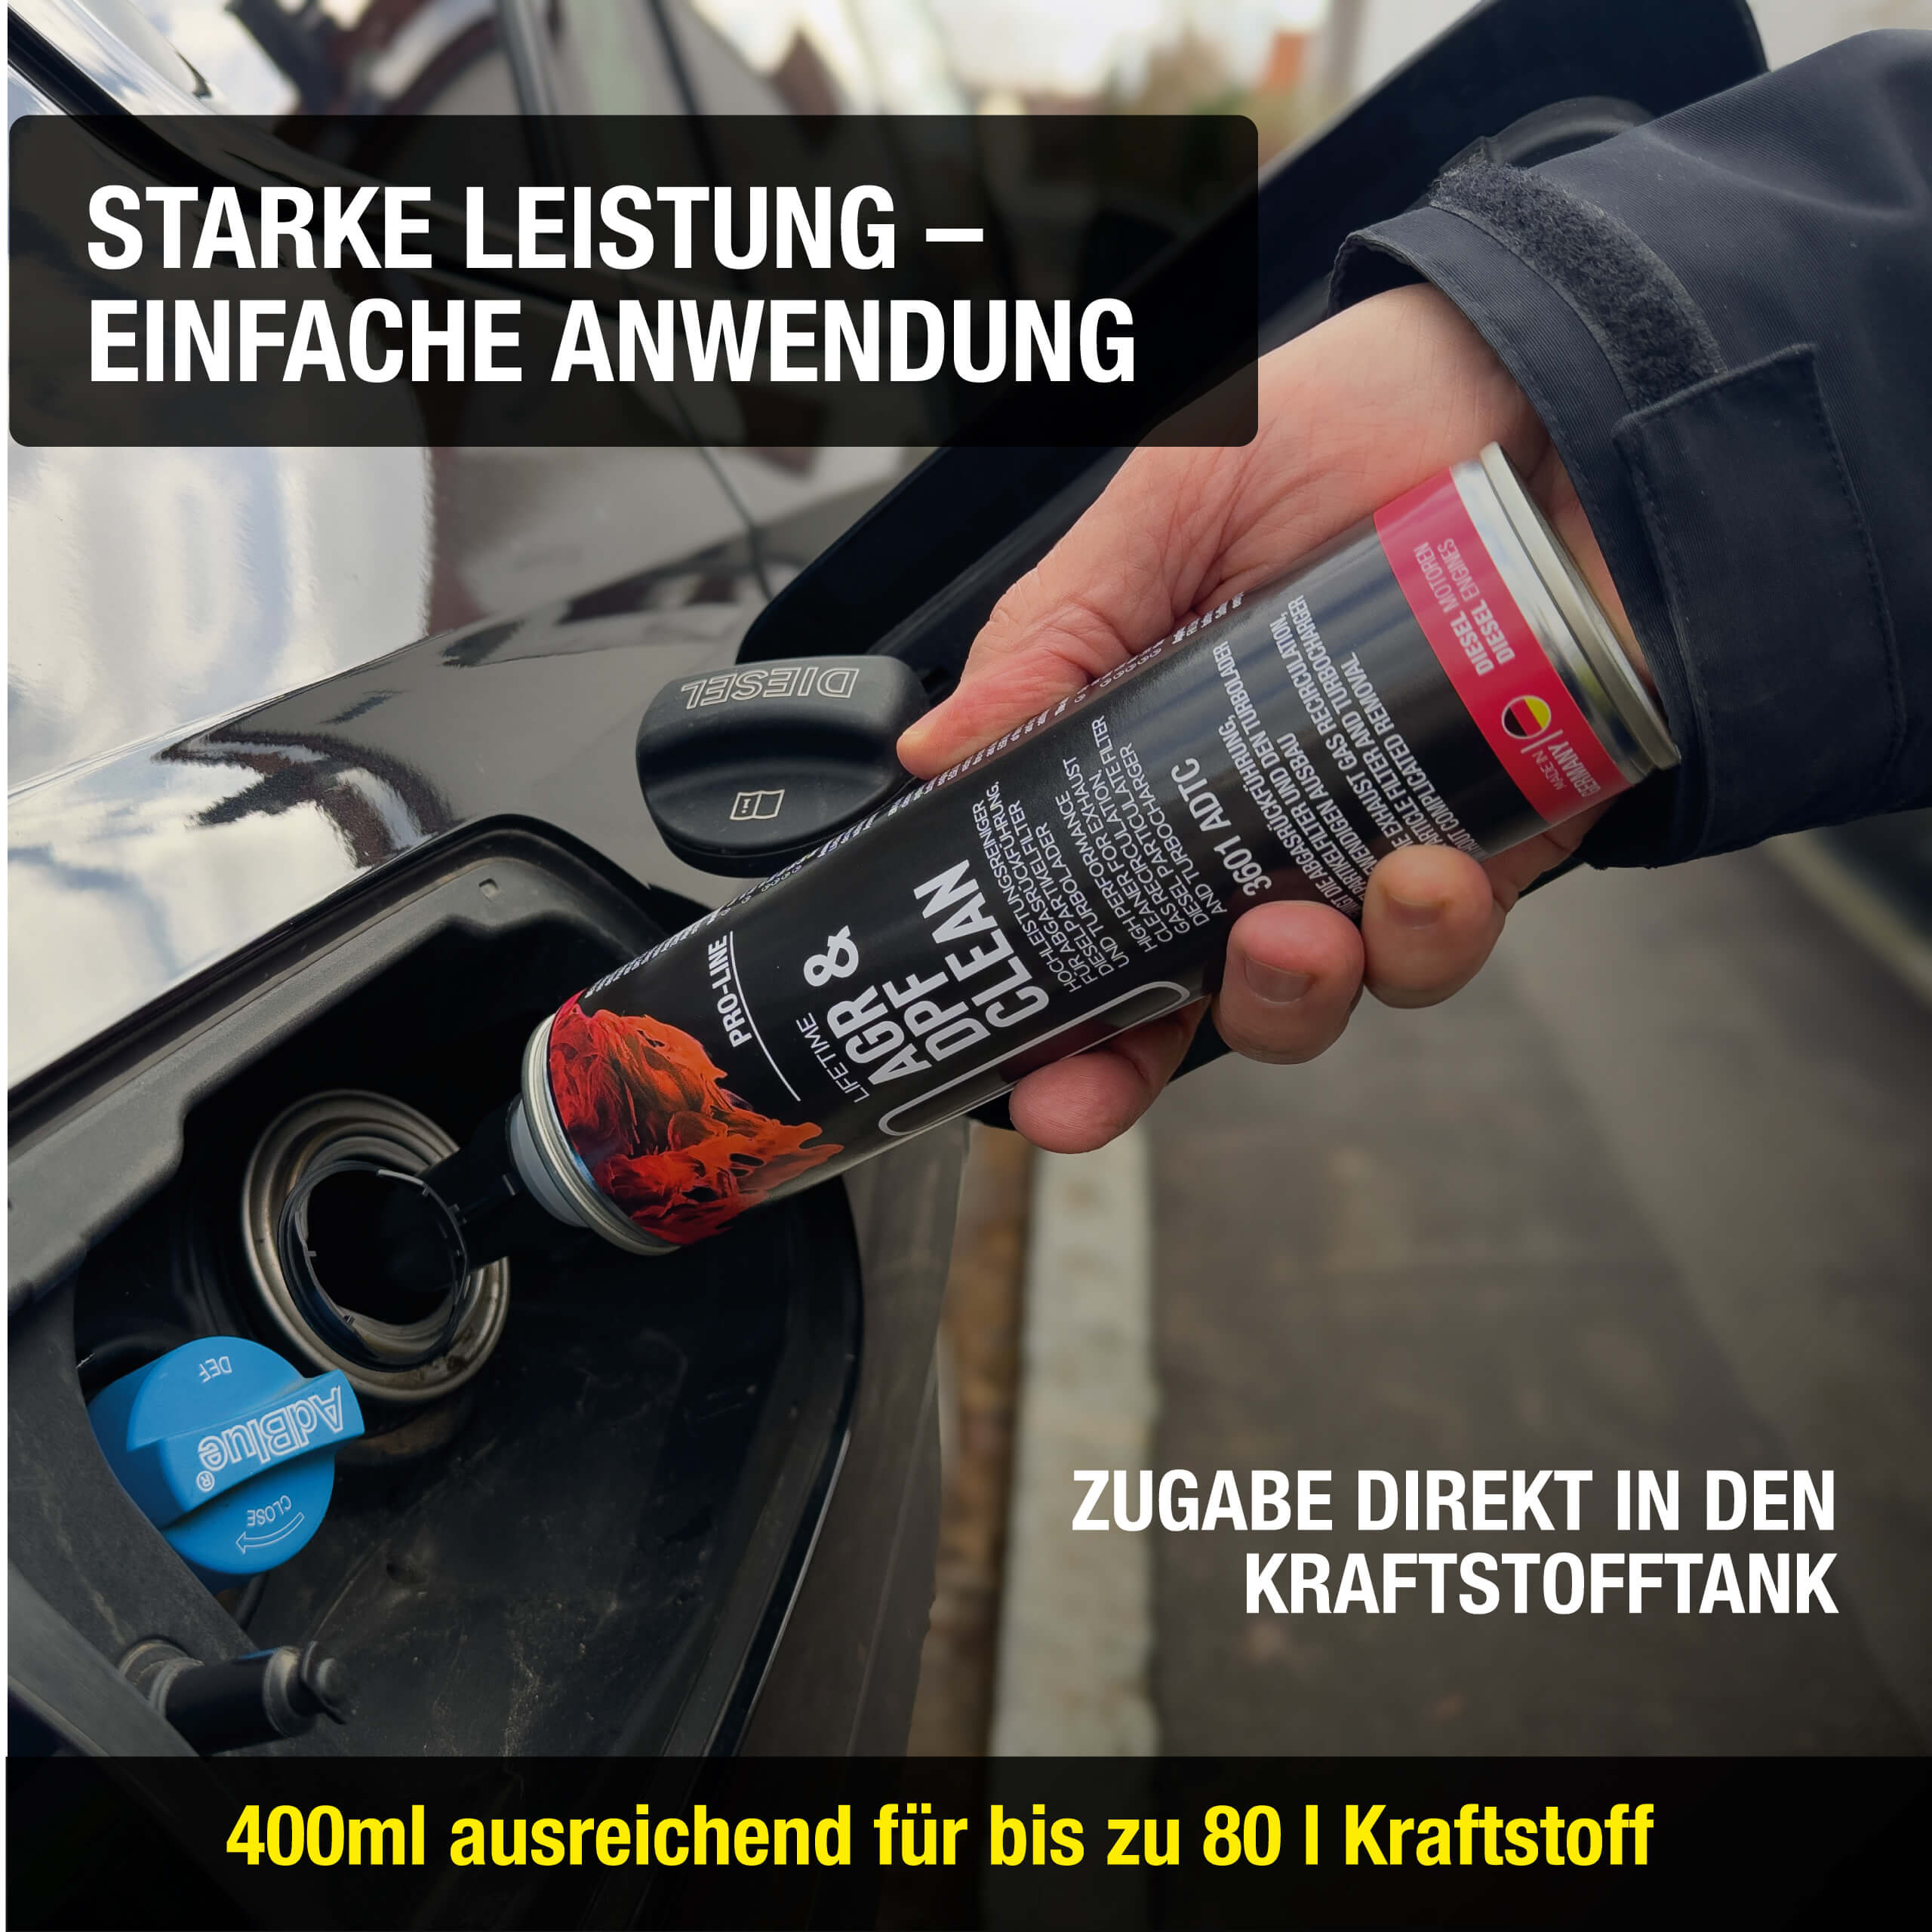 302 Ansaugtrakt & AGR Reiniger Diesel – CMS CleanTEC GmbH